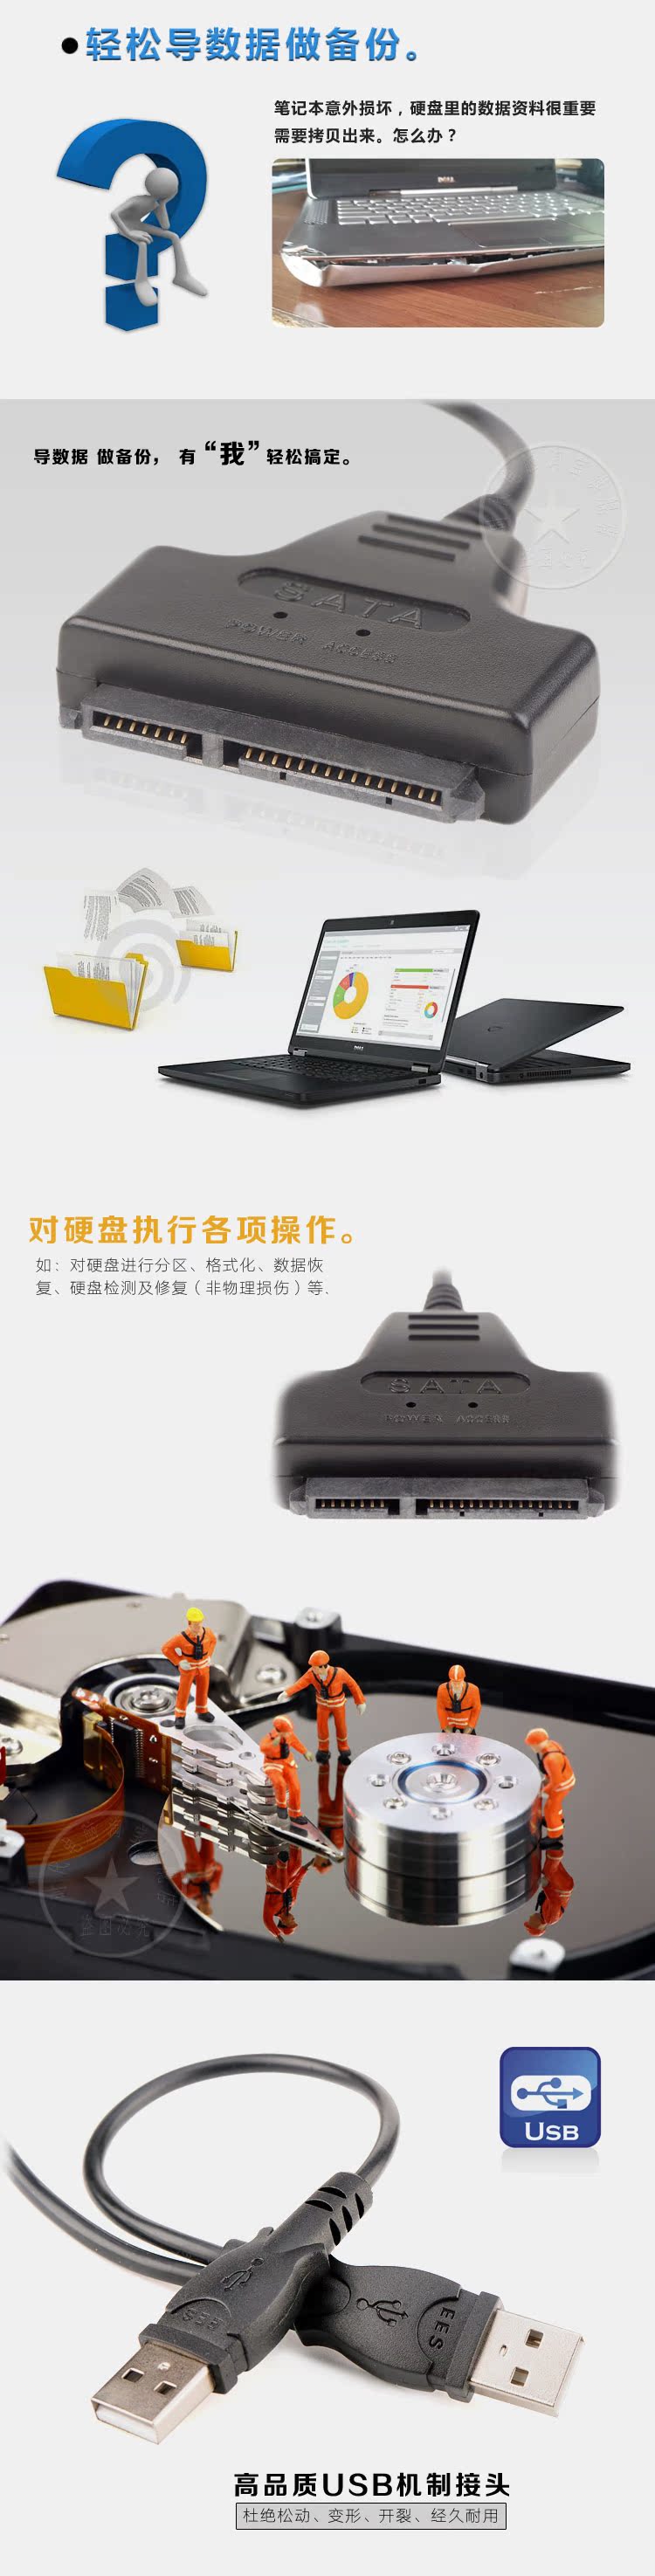 Hub USB - Ref 363511 Image 6